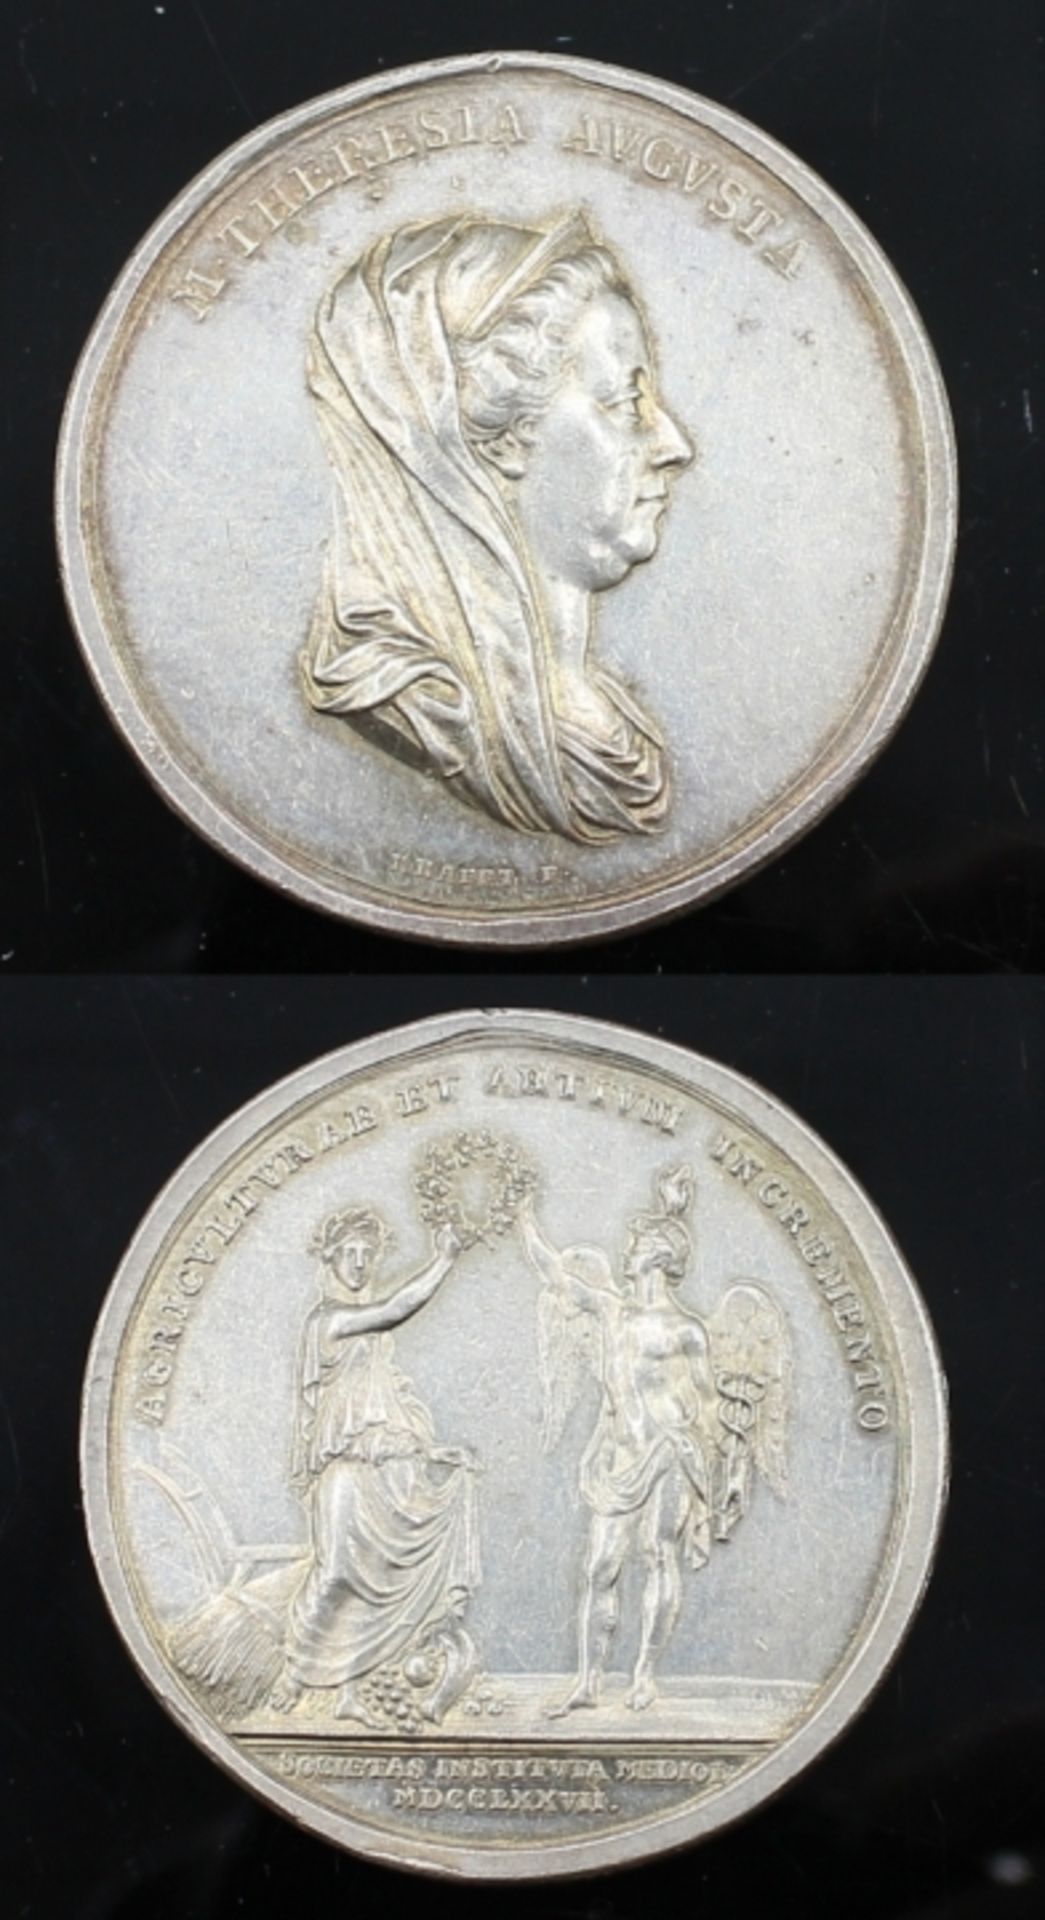 Silbermedaille - Maria Theresia Augusta Brustbild Agriculturae Artium Incremento, Abbildung Diana